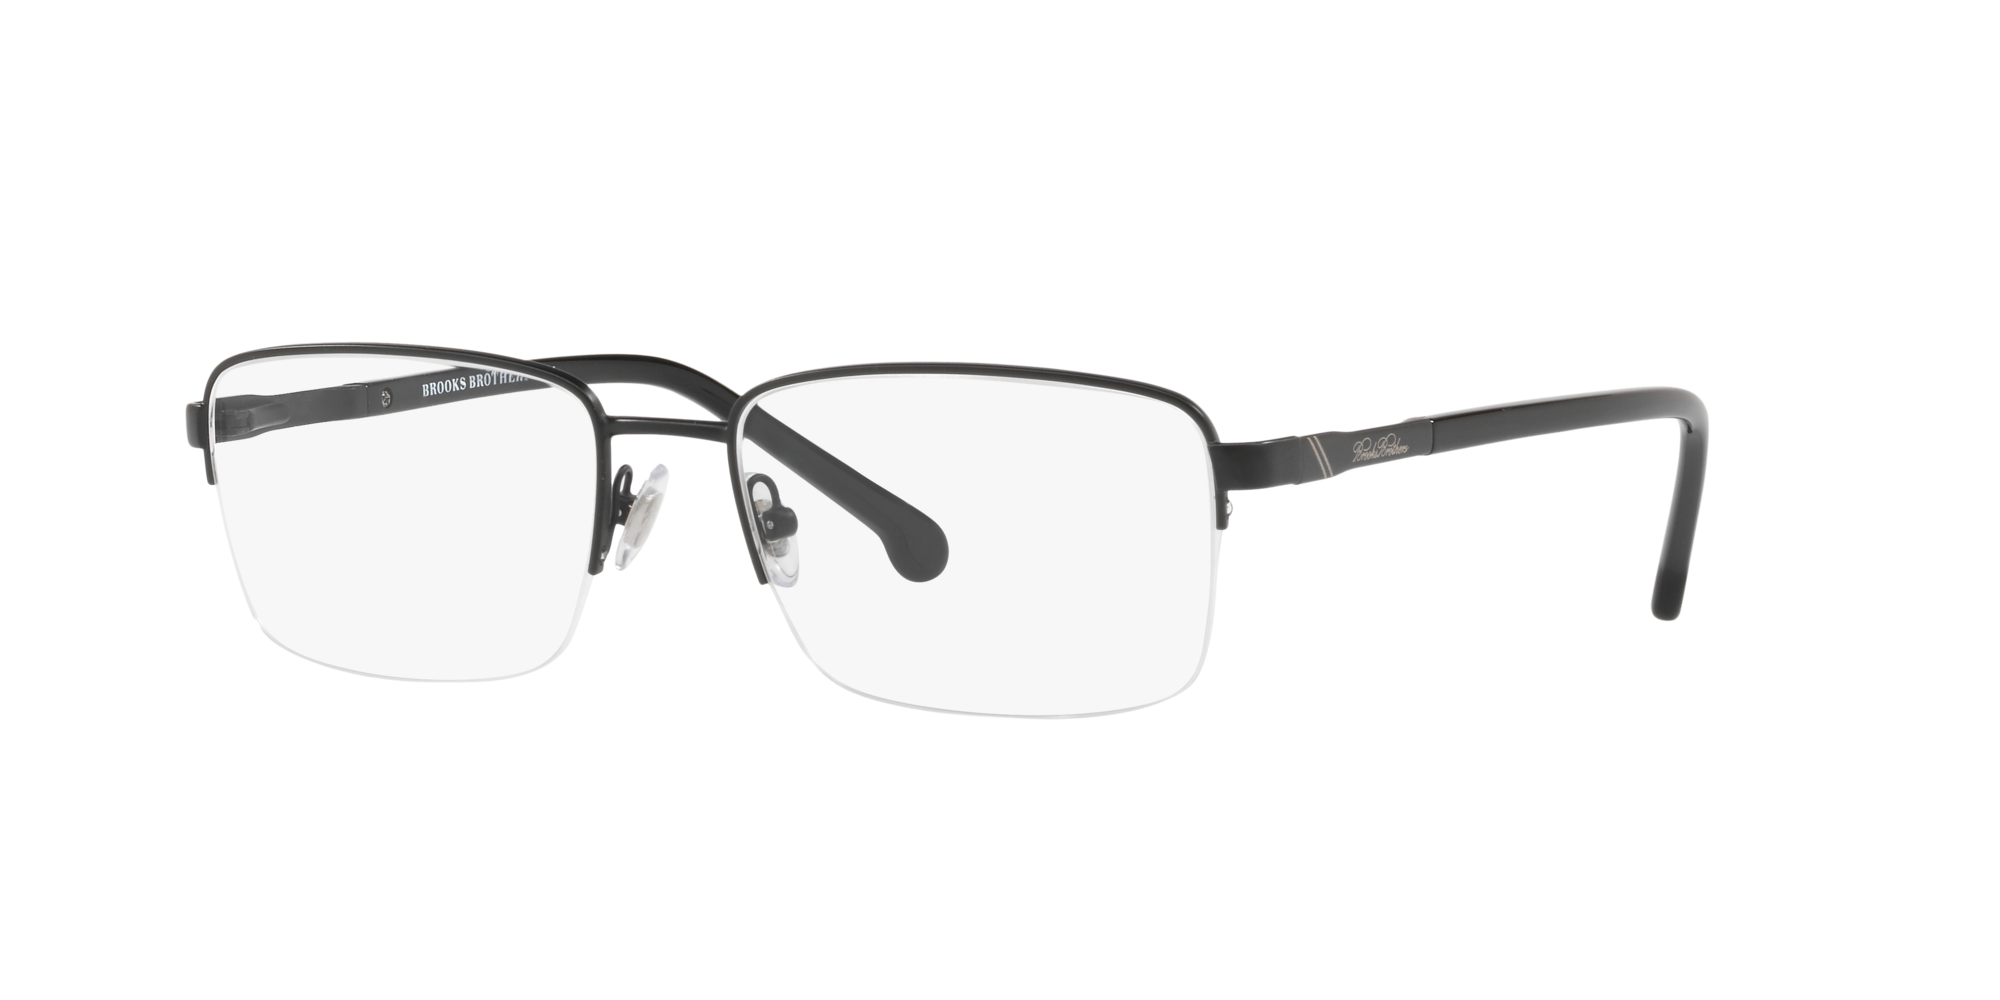 Angle_Left01 Brooks Brothers BB 144 Glasses Transparent / Grey